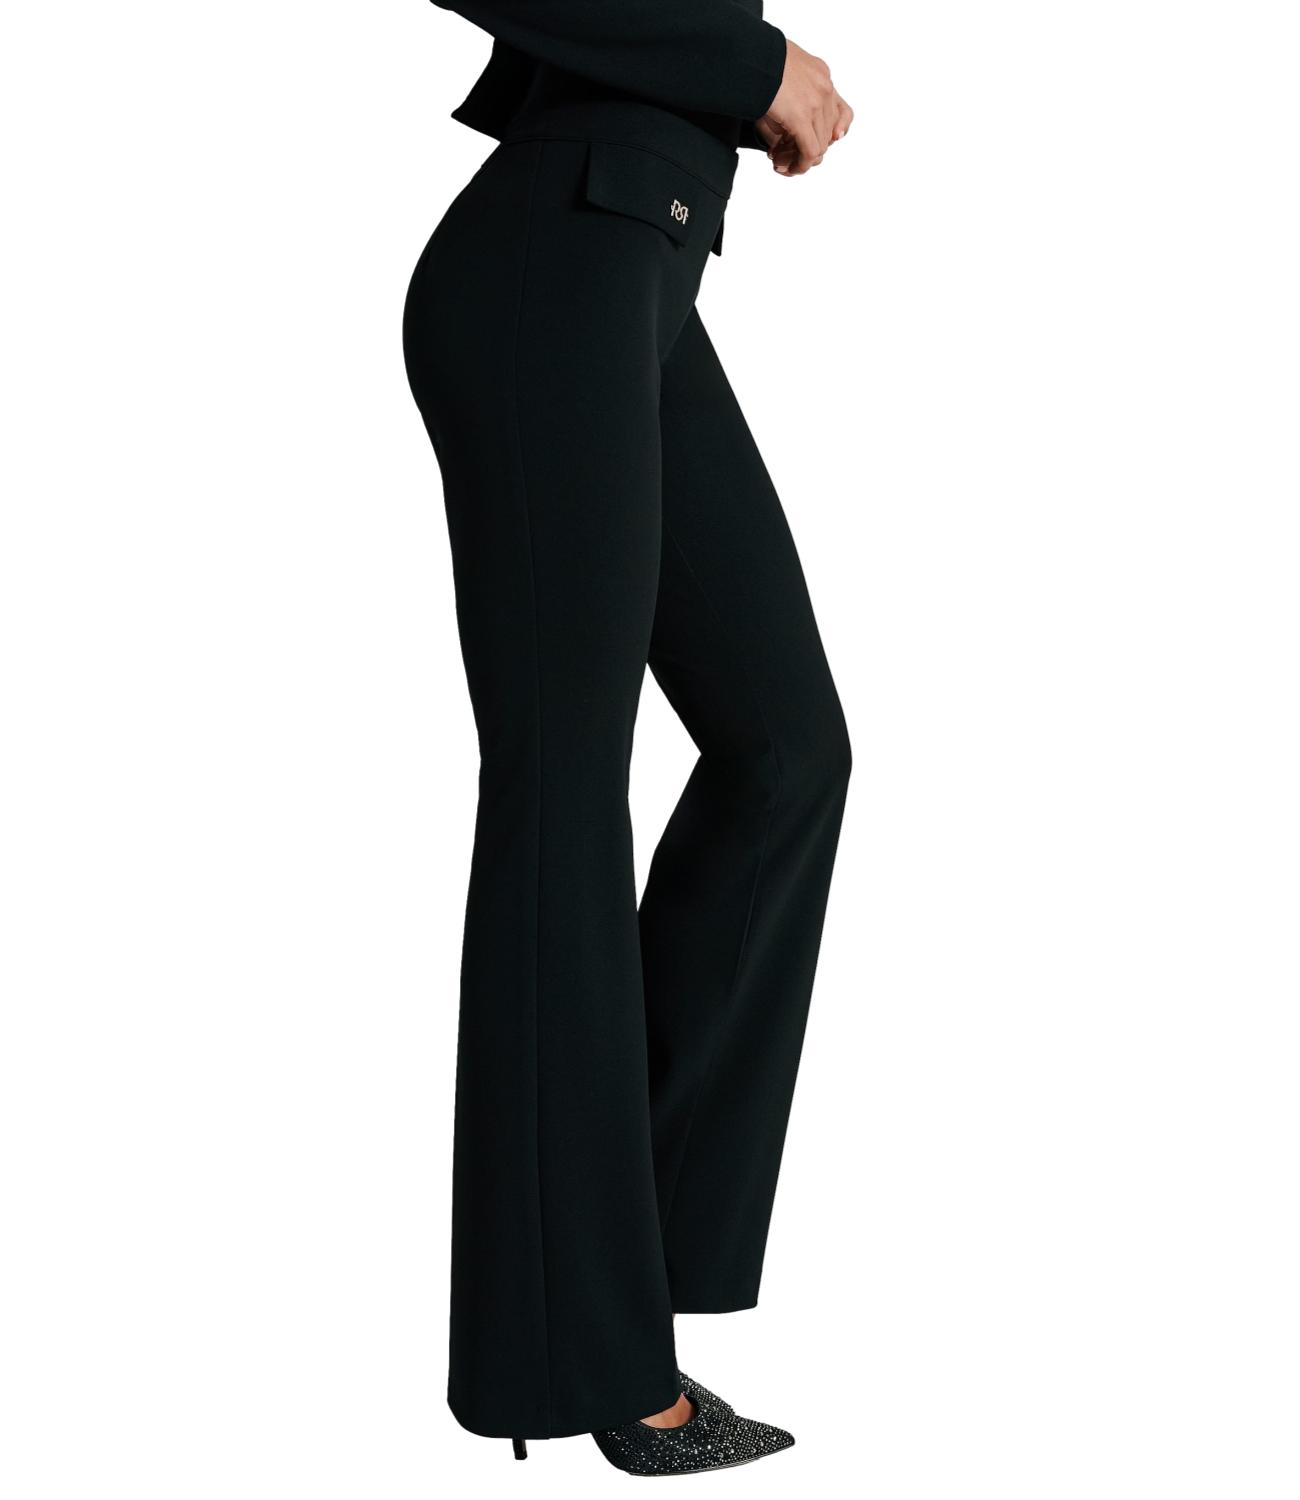 Women's black flared trousers